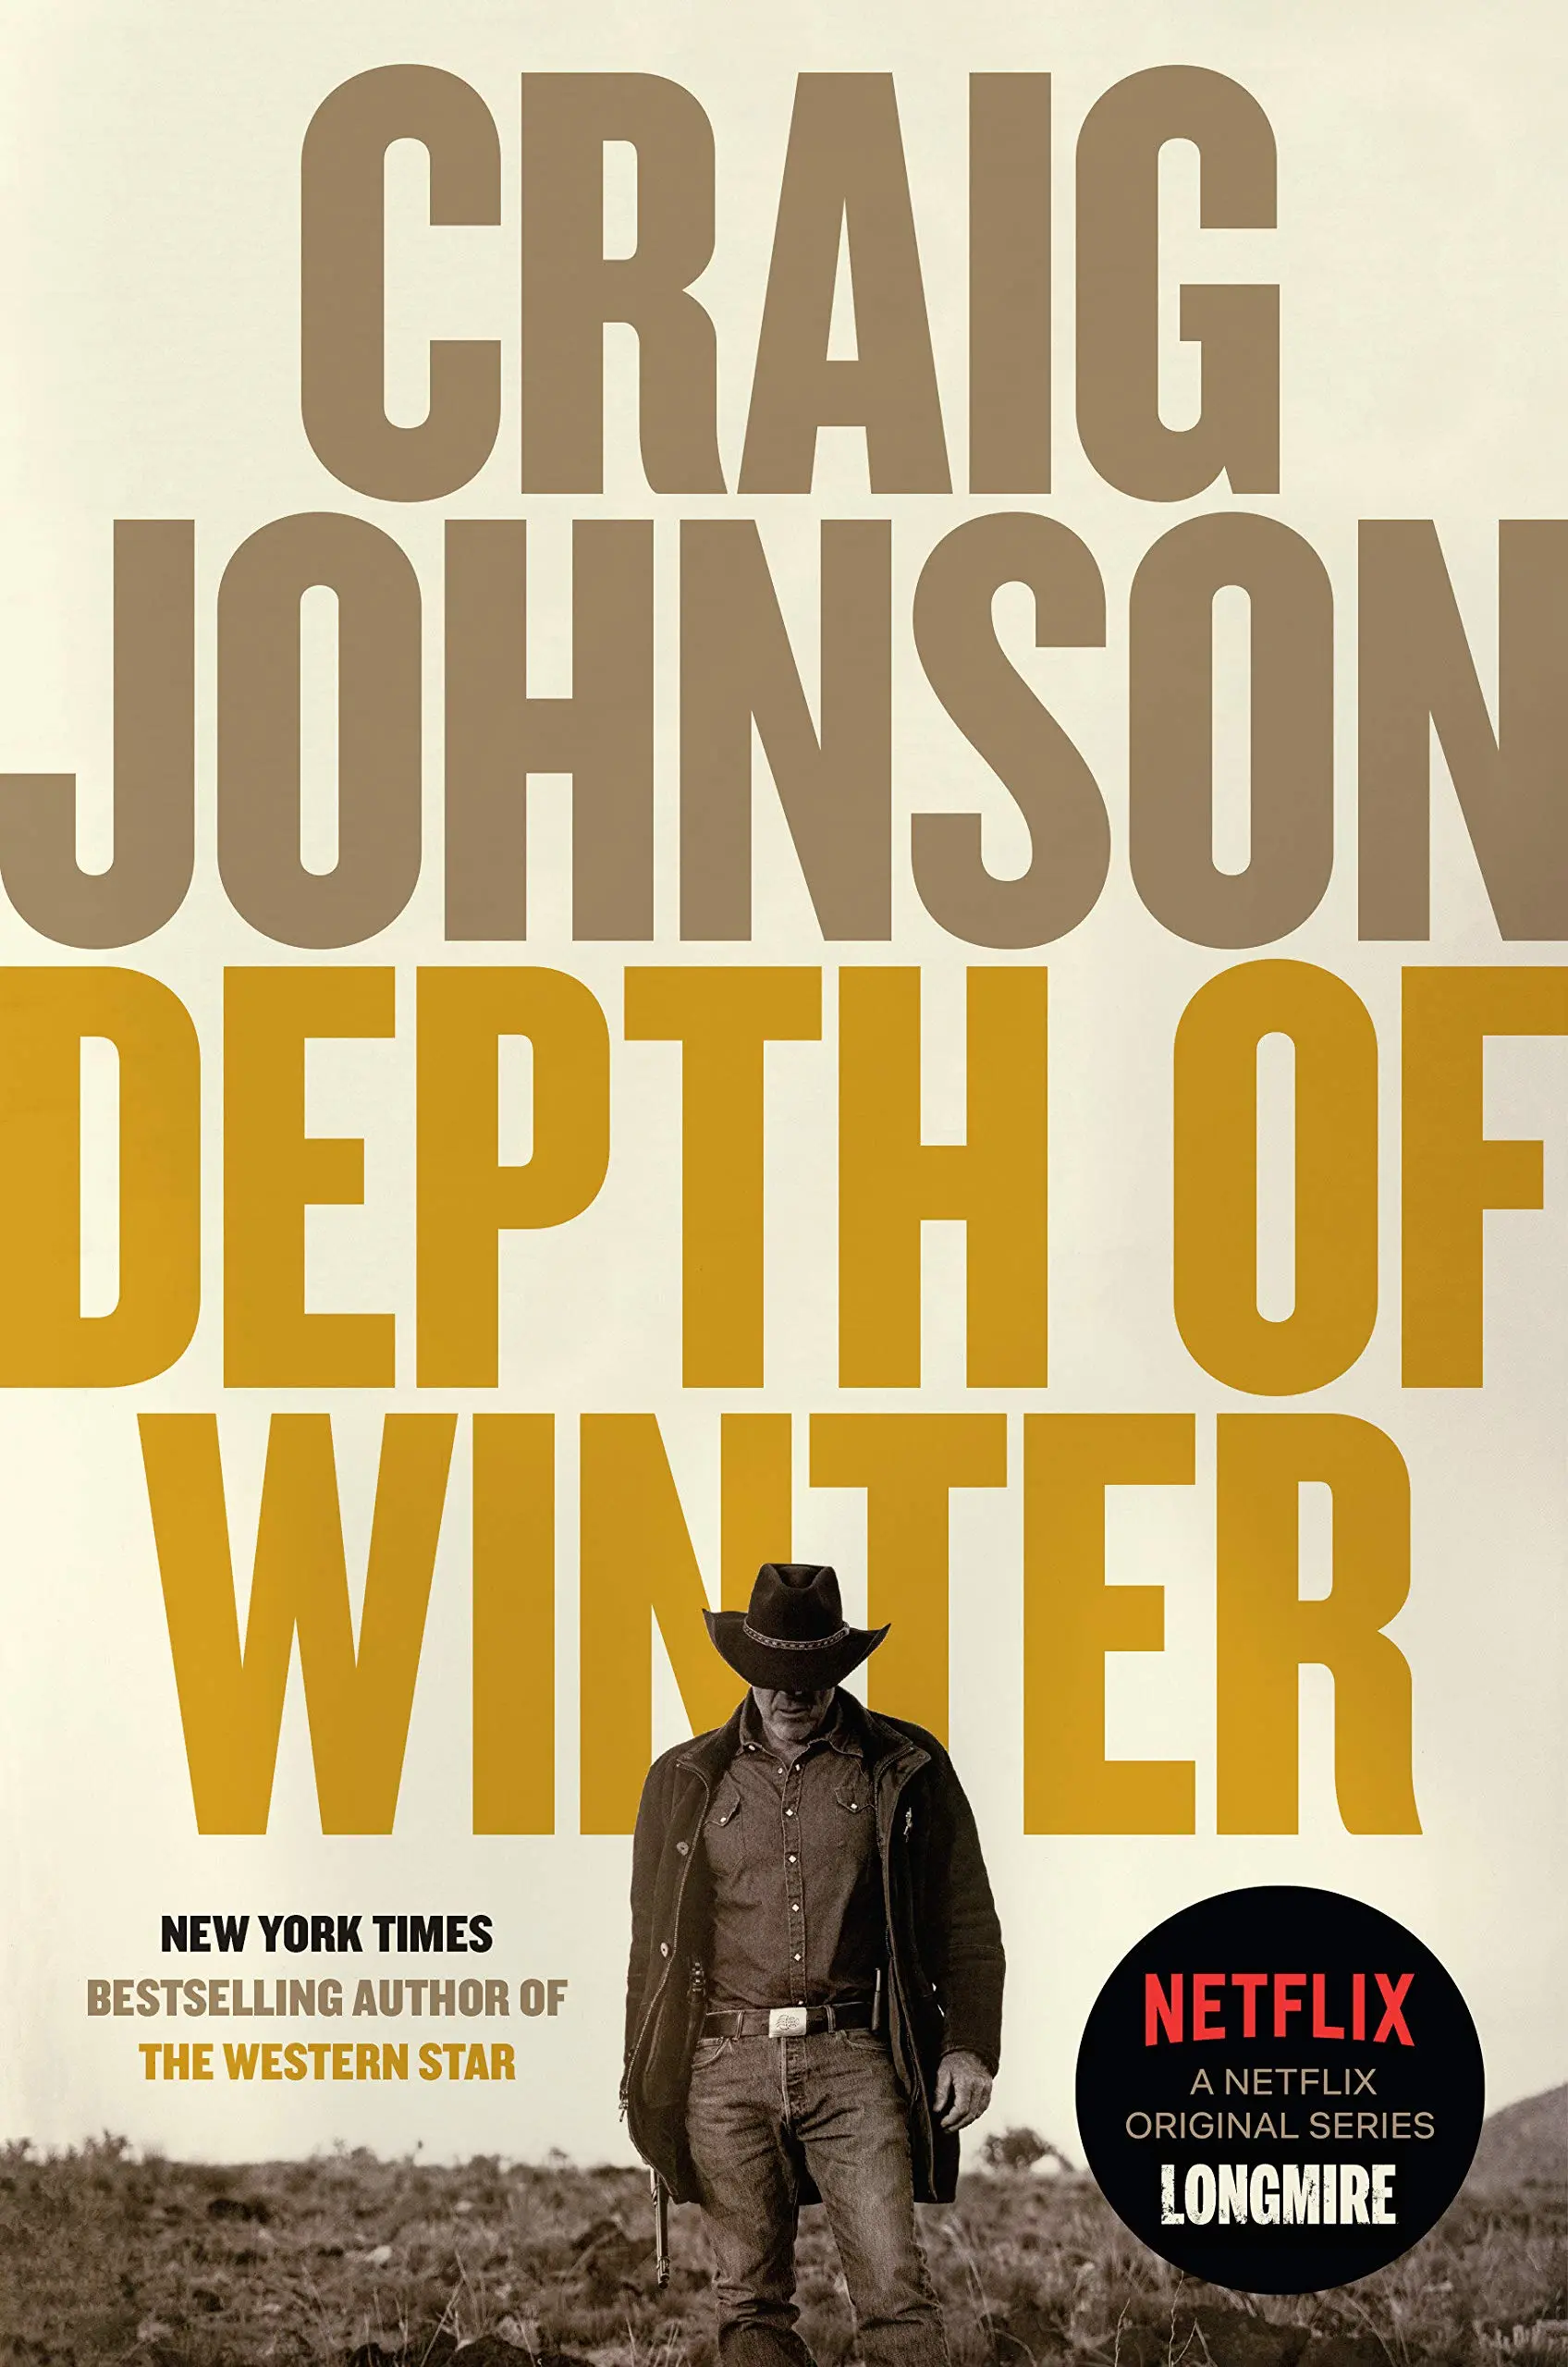 Depth Of Winter, Johnson's Twenteth book